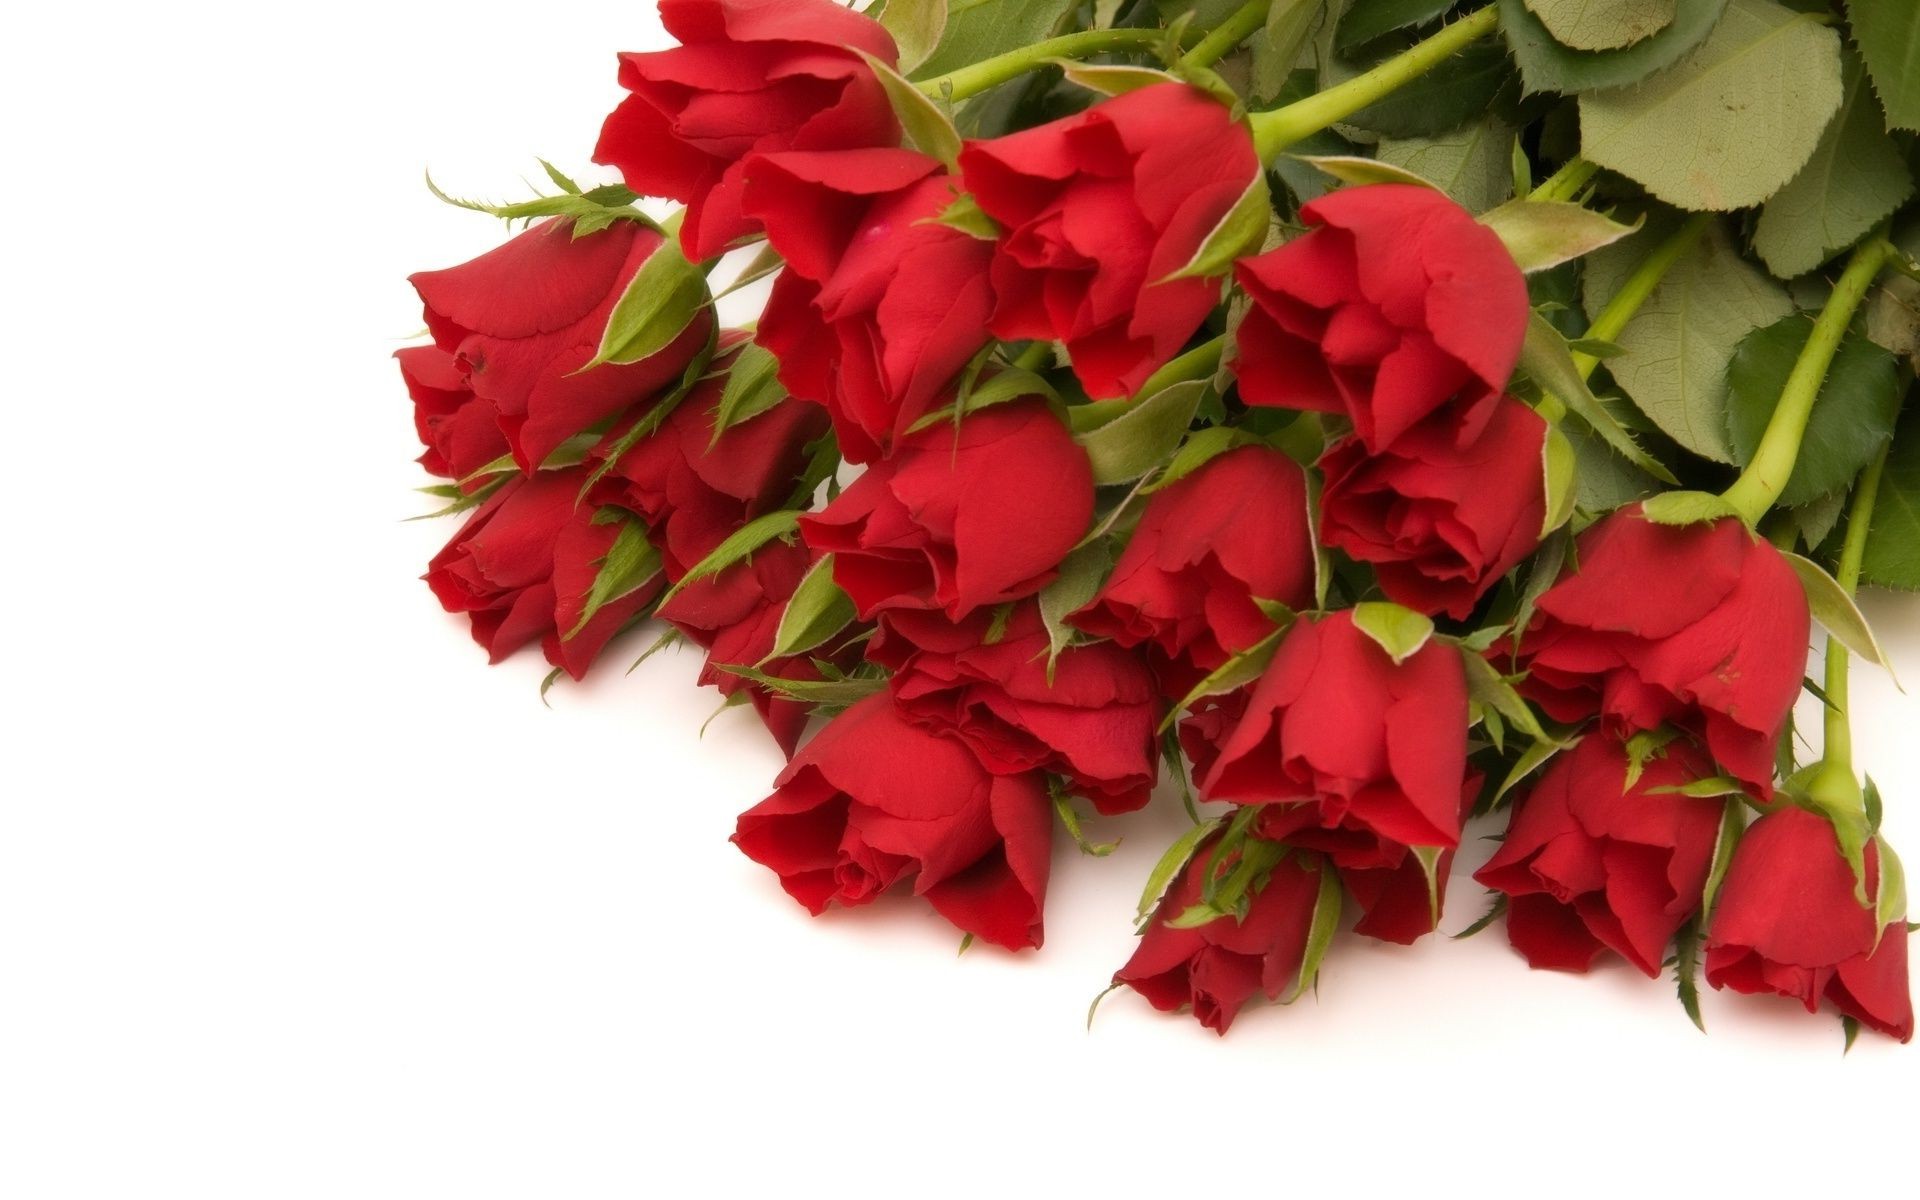 Rose Gift Love Romance Romantic Anniversary Flower - My Valentine White Roses - HD Wallpaper 